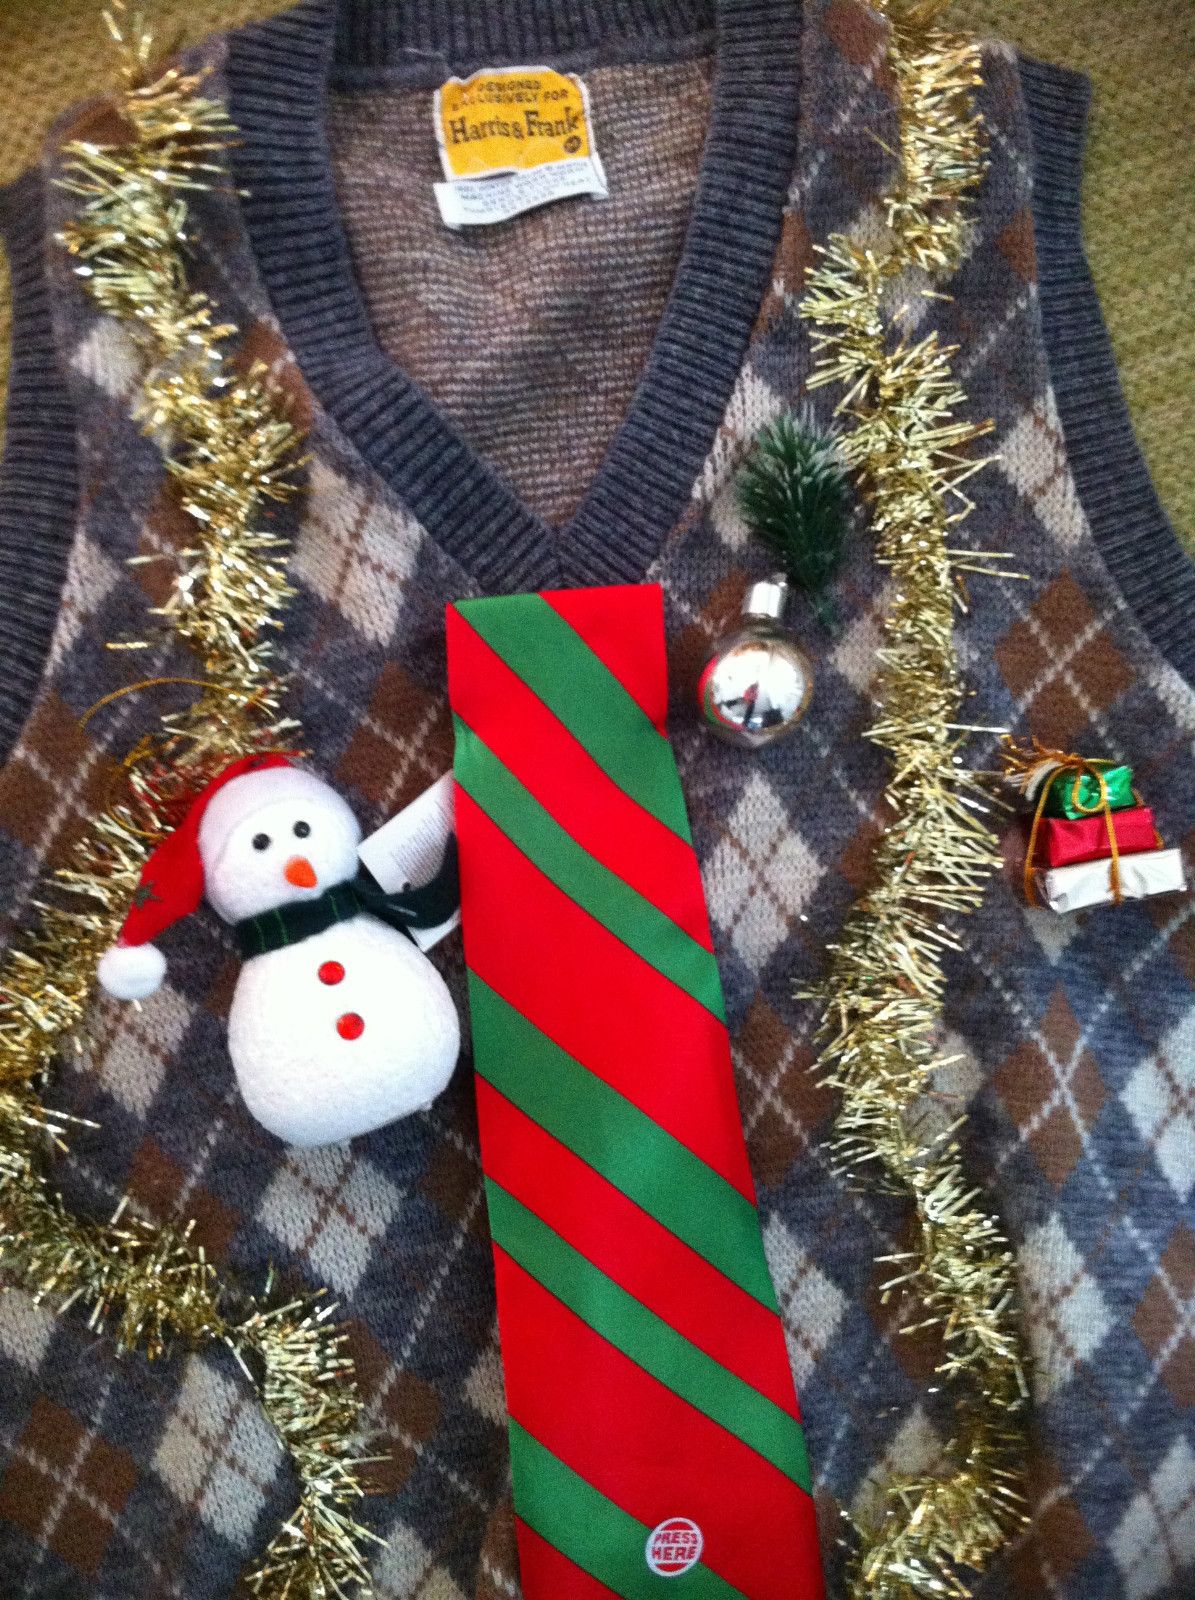 vintage Harris & Frank argyle musical tie light up ugly Christmas